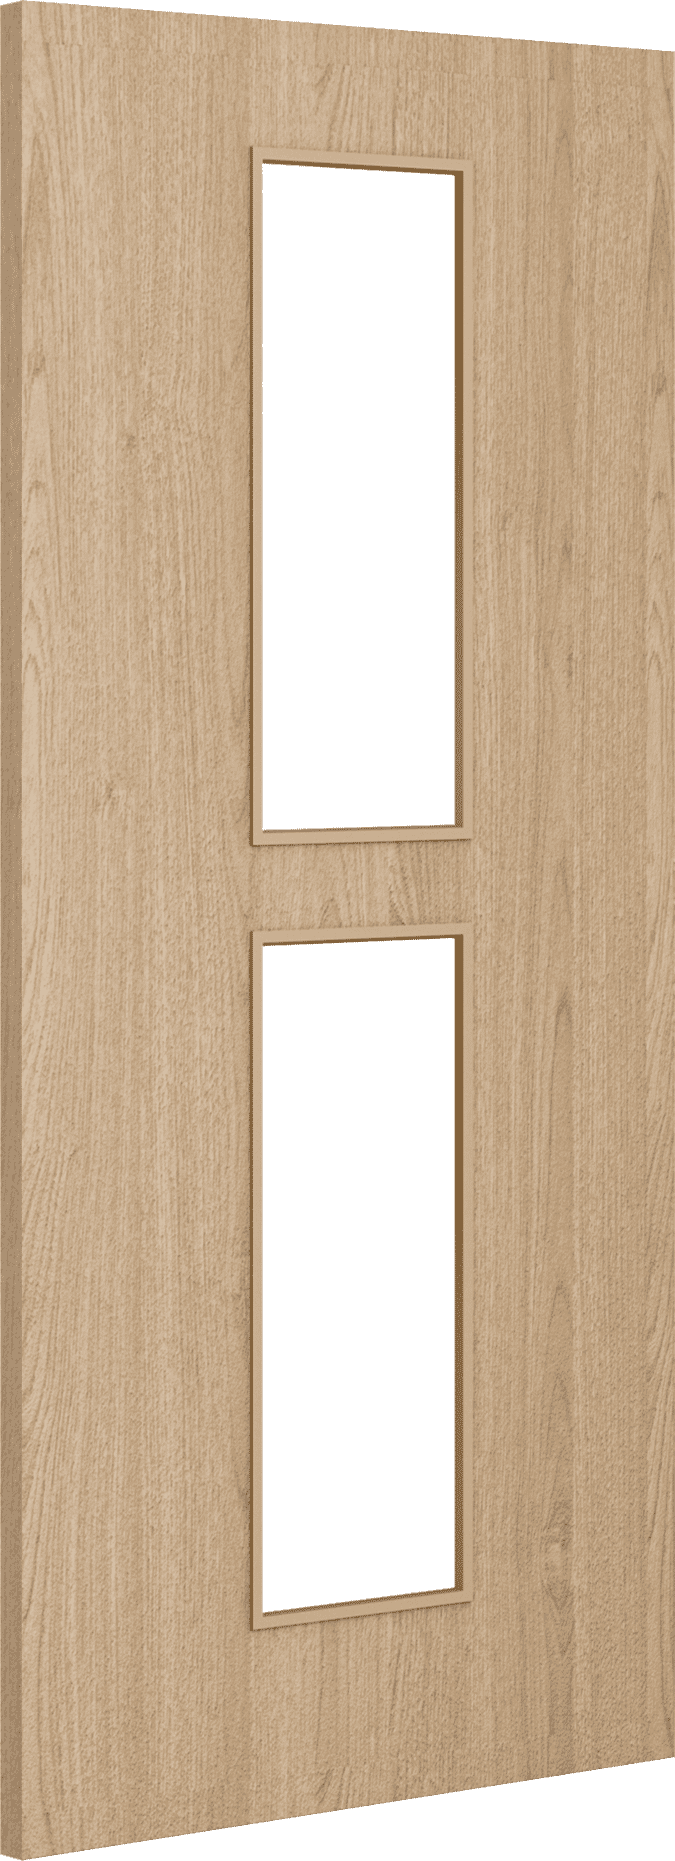 2040mm x 626mm x 44mm Architectural Oak 12 Frosted Glazed - Prefinished FD30 Fire Door Blank